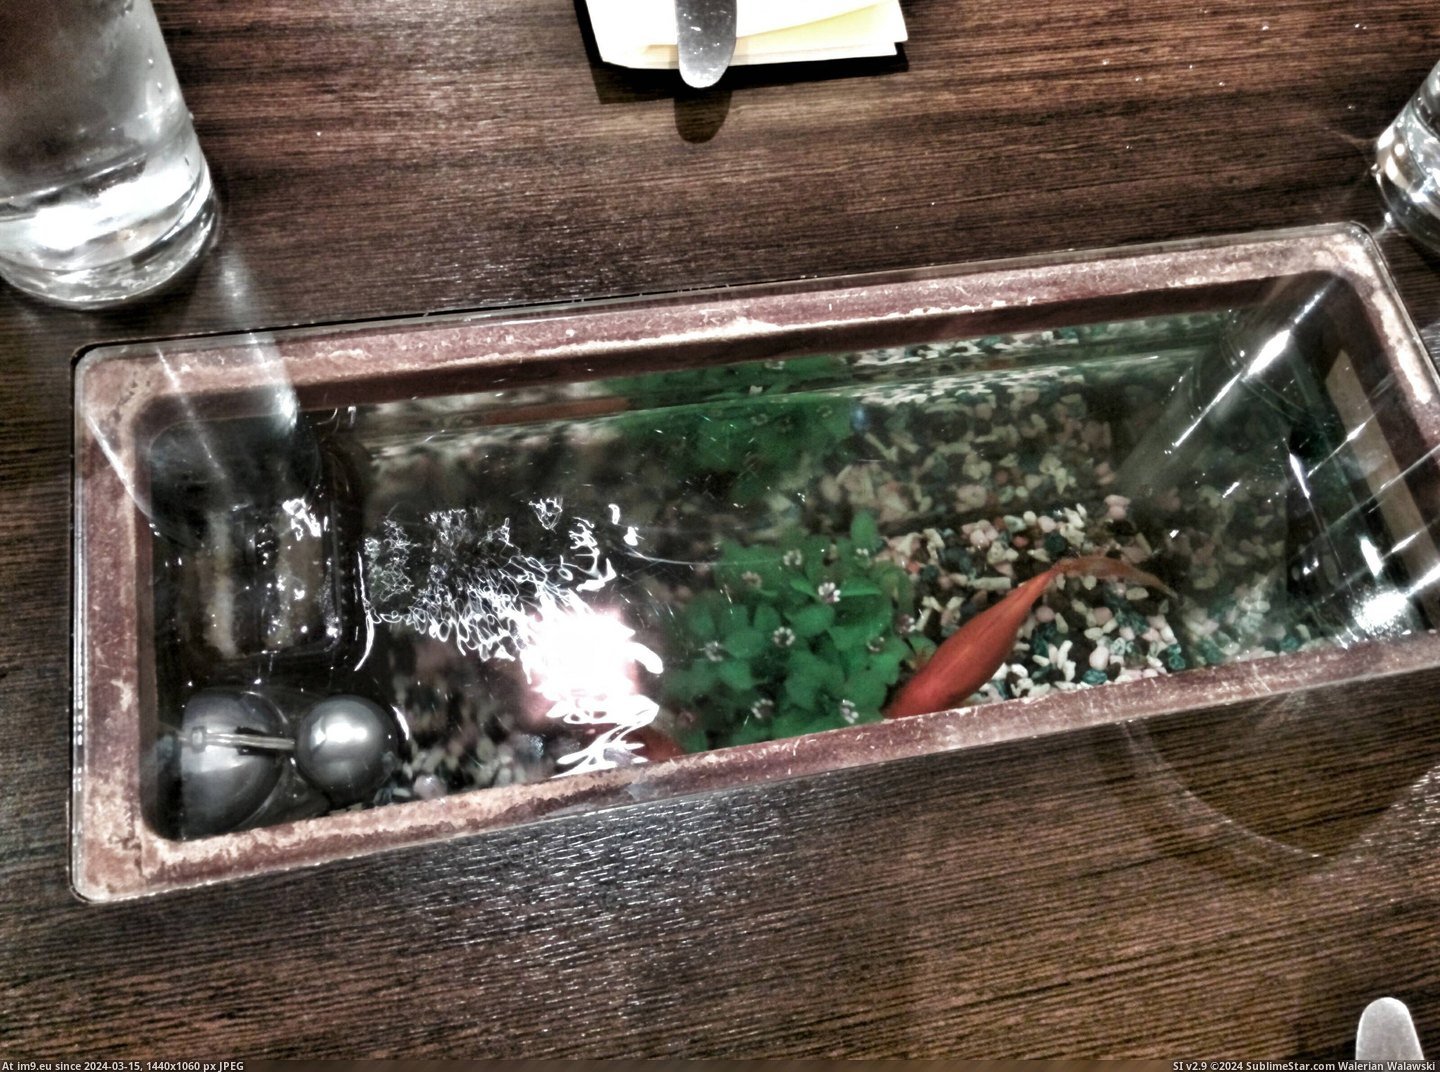 #Bowl #Restaurant #Tables #Fish [Mildlyinteresting] The tables in this restaurant have a fish bowl in the middle of them. Pic. (Изображение из альбом My r/MILDLYINTERESTING favs))